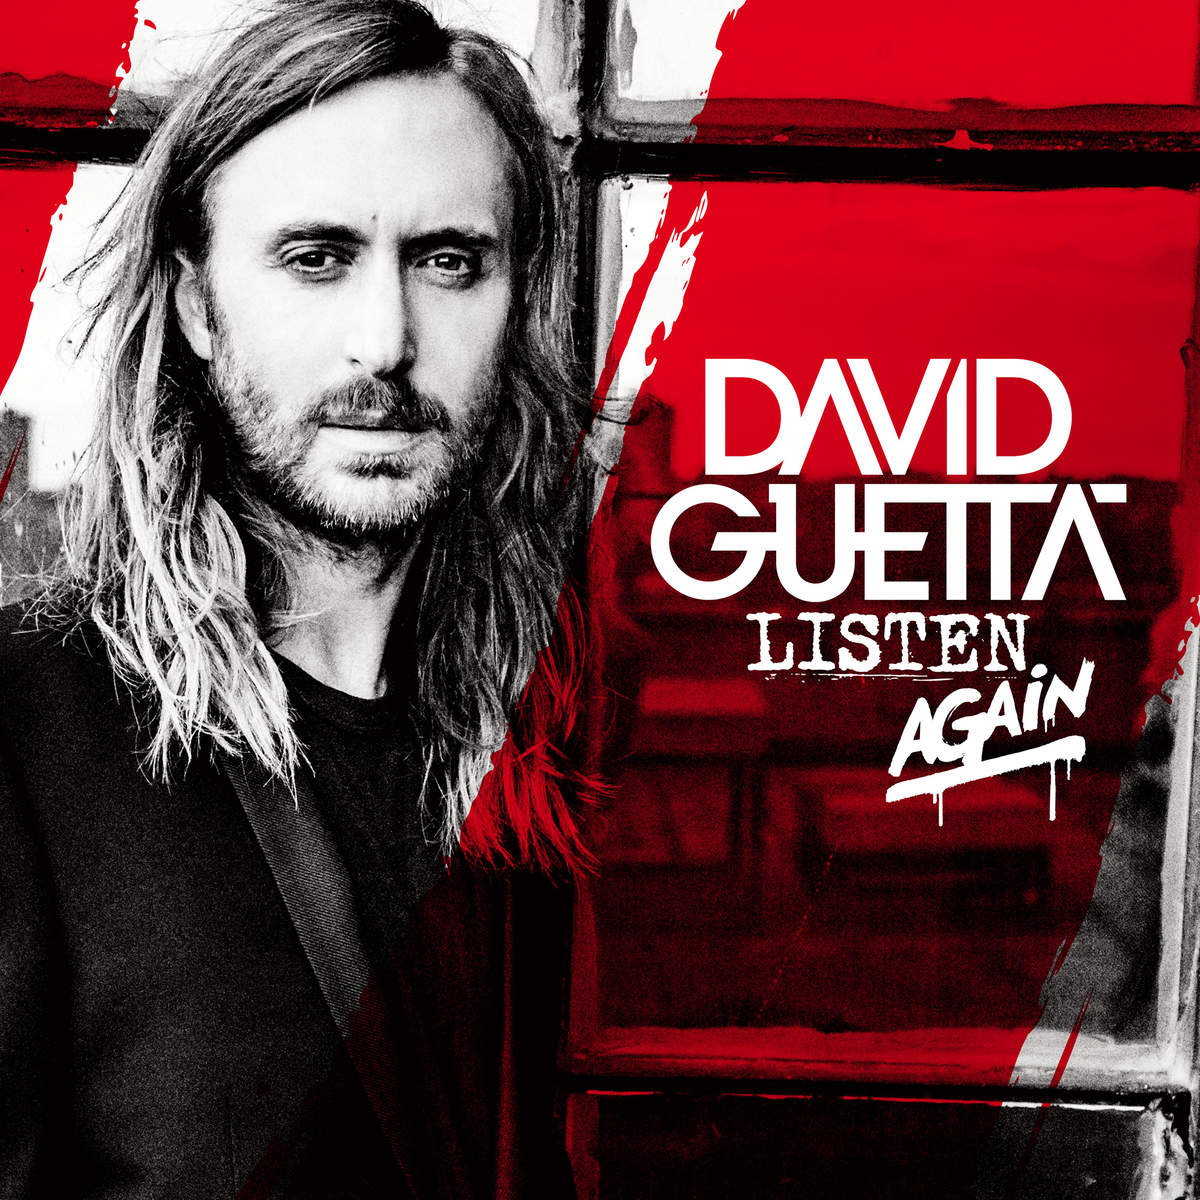 David Guetta wallpapers, Music, HQ David Guetta pictures | 4K Wallpapers  2019